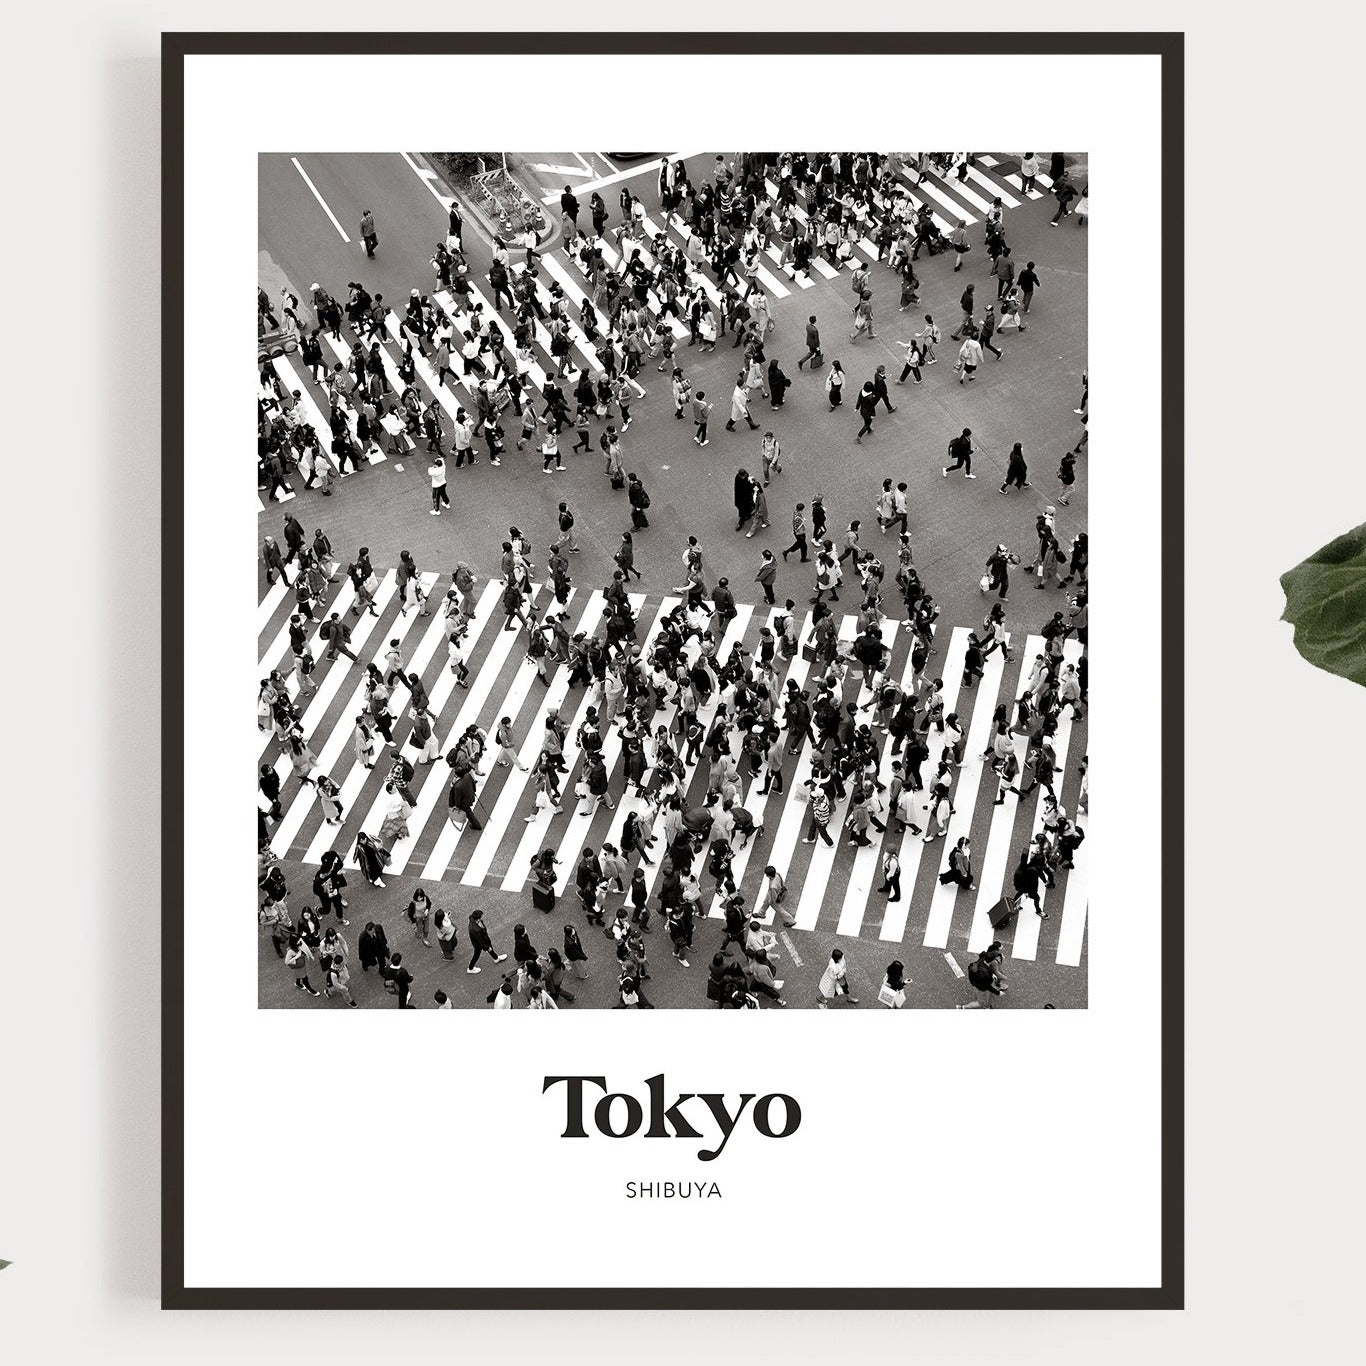 Tokyo - Black & White Shibuya Crossing Print